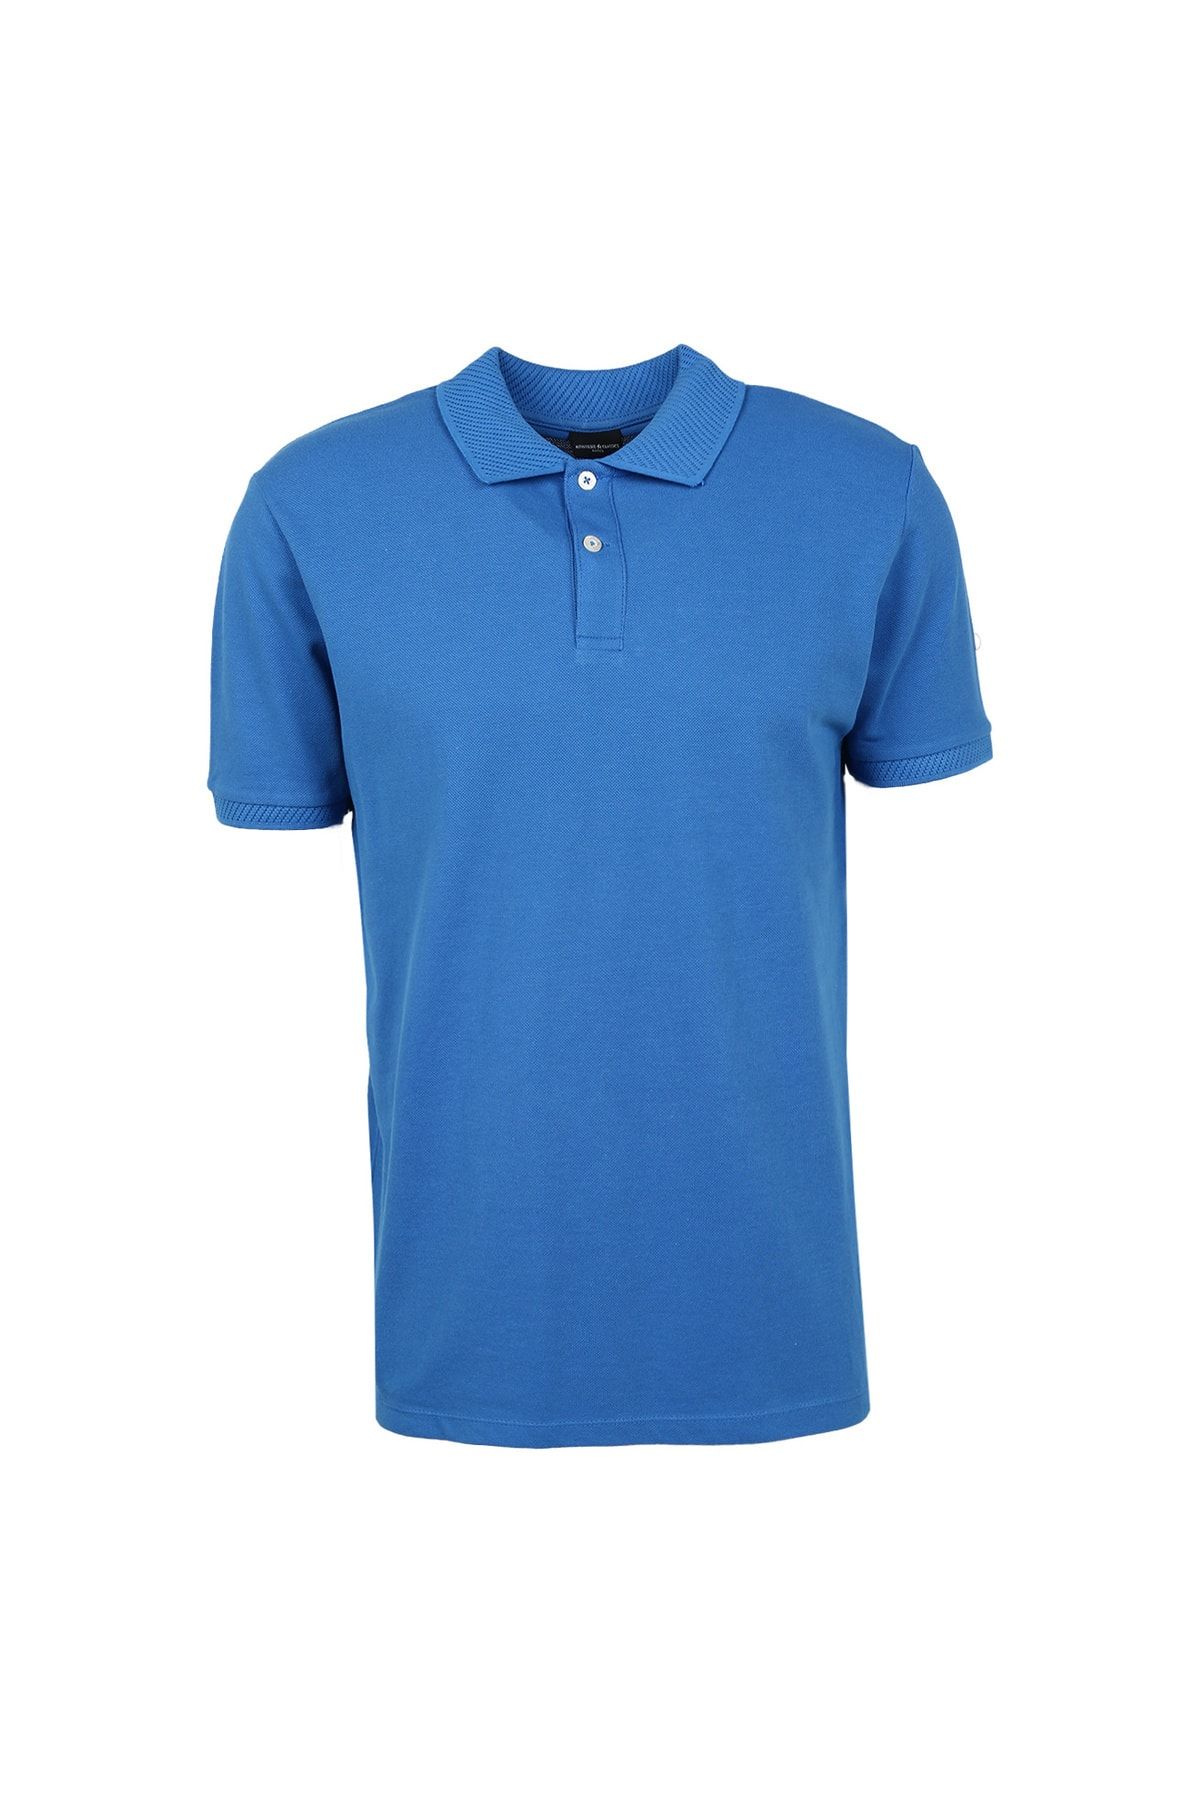 Altınyıldız Classics Altınyıldız Classics Polo Yaka Mavi Erkek T-Shirt 4A9000000001